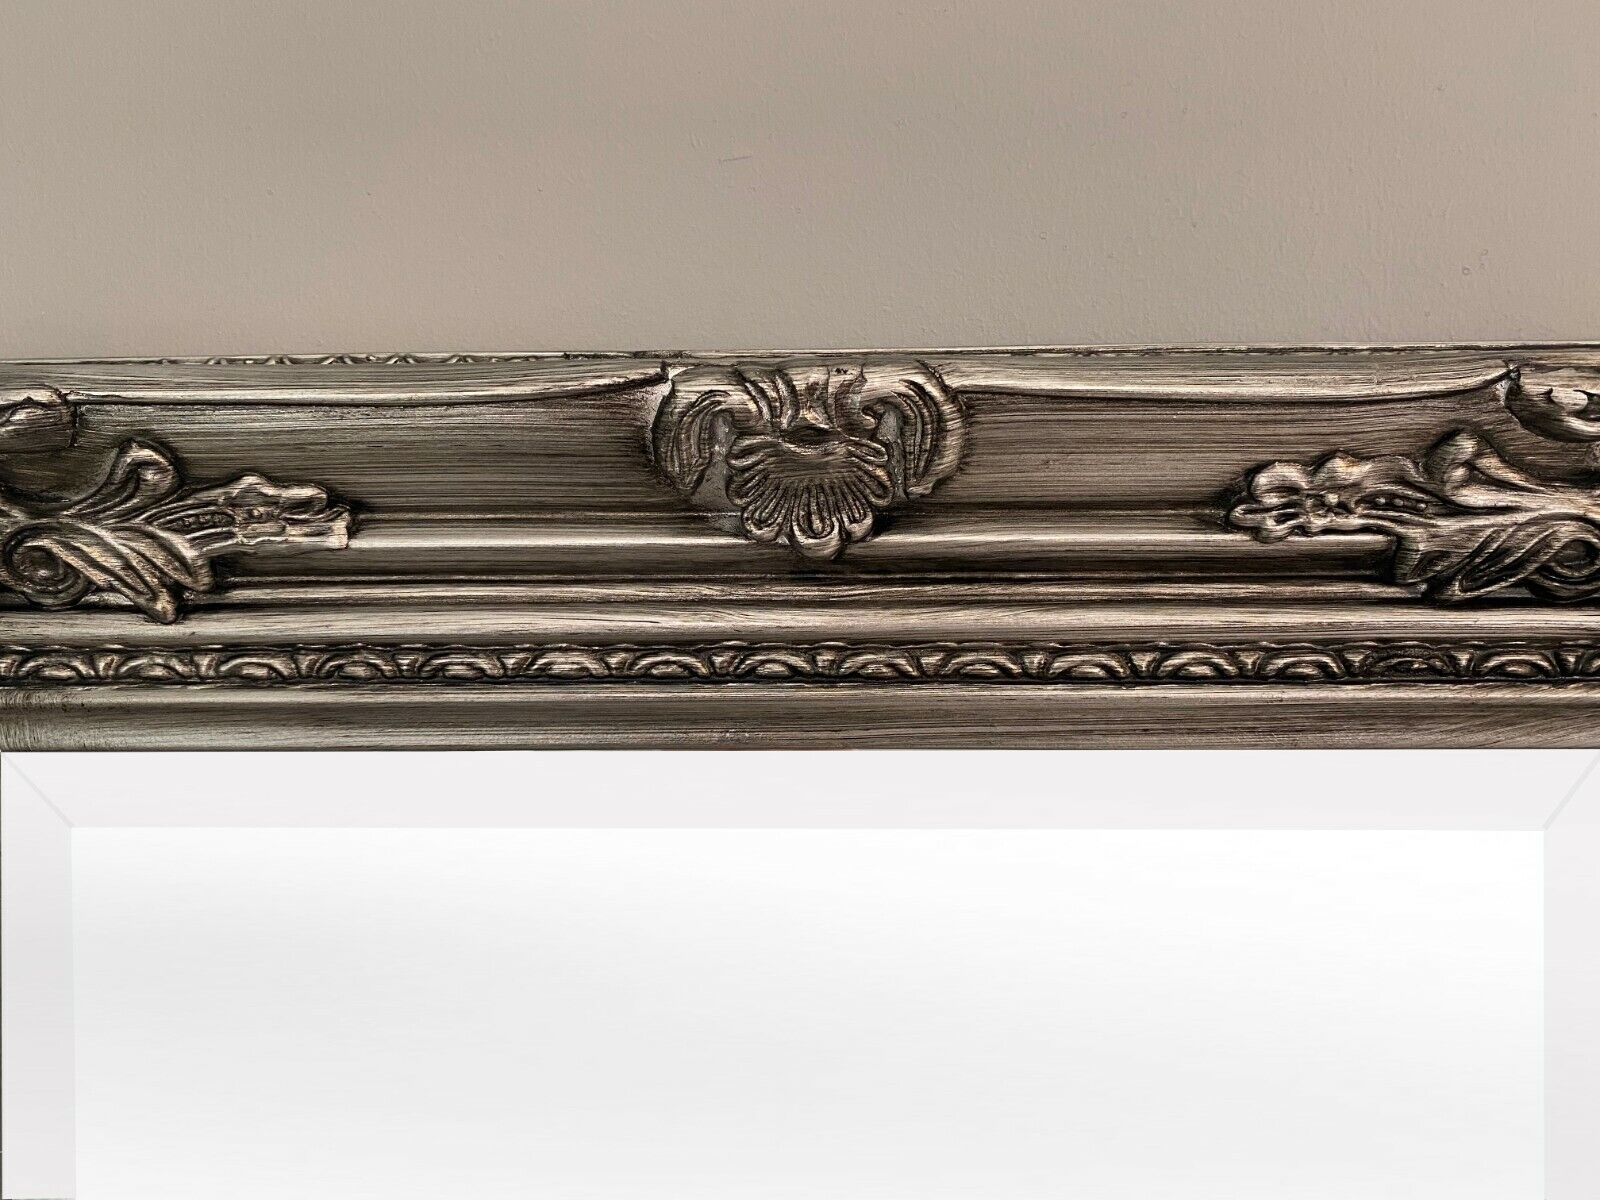 Tall Antique Silver Full Length Floor Wall Dressing Mirror wih Hardwood Frame